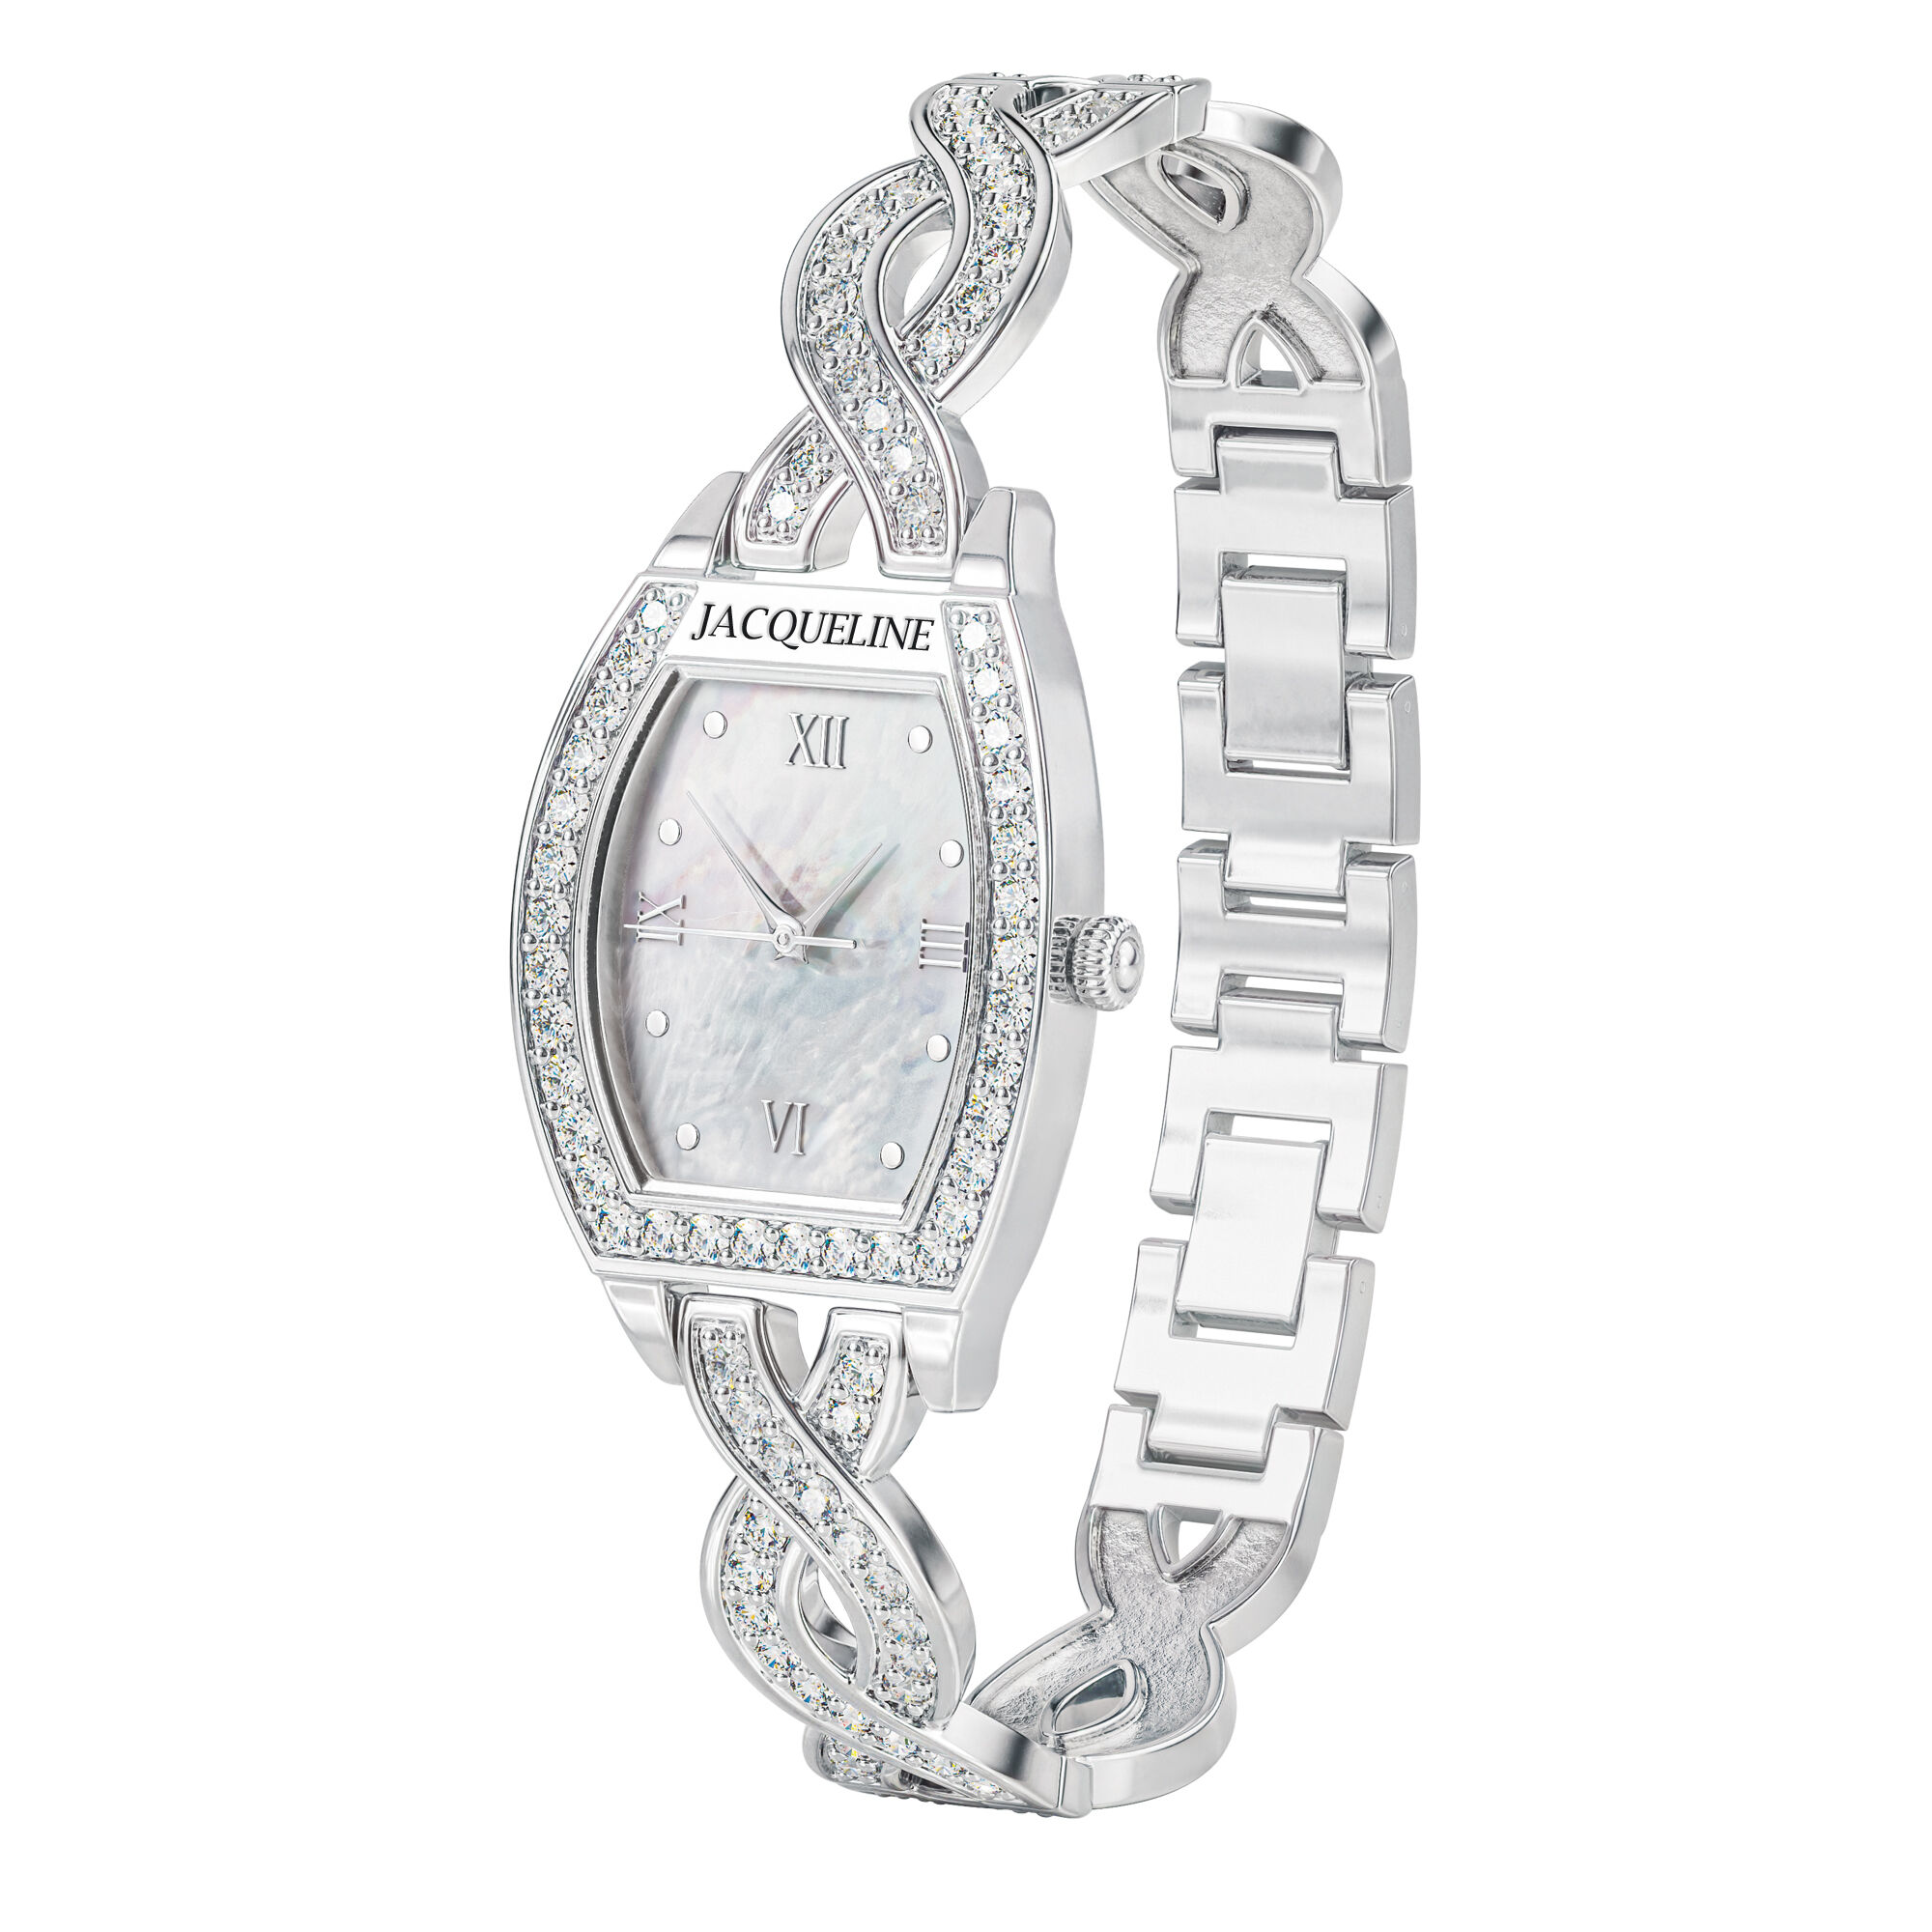 Birthstone Bracelet Watch 10148 0010 d april